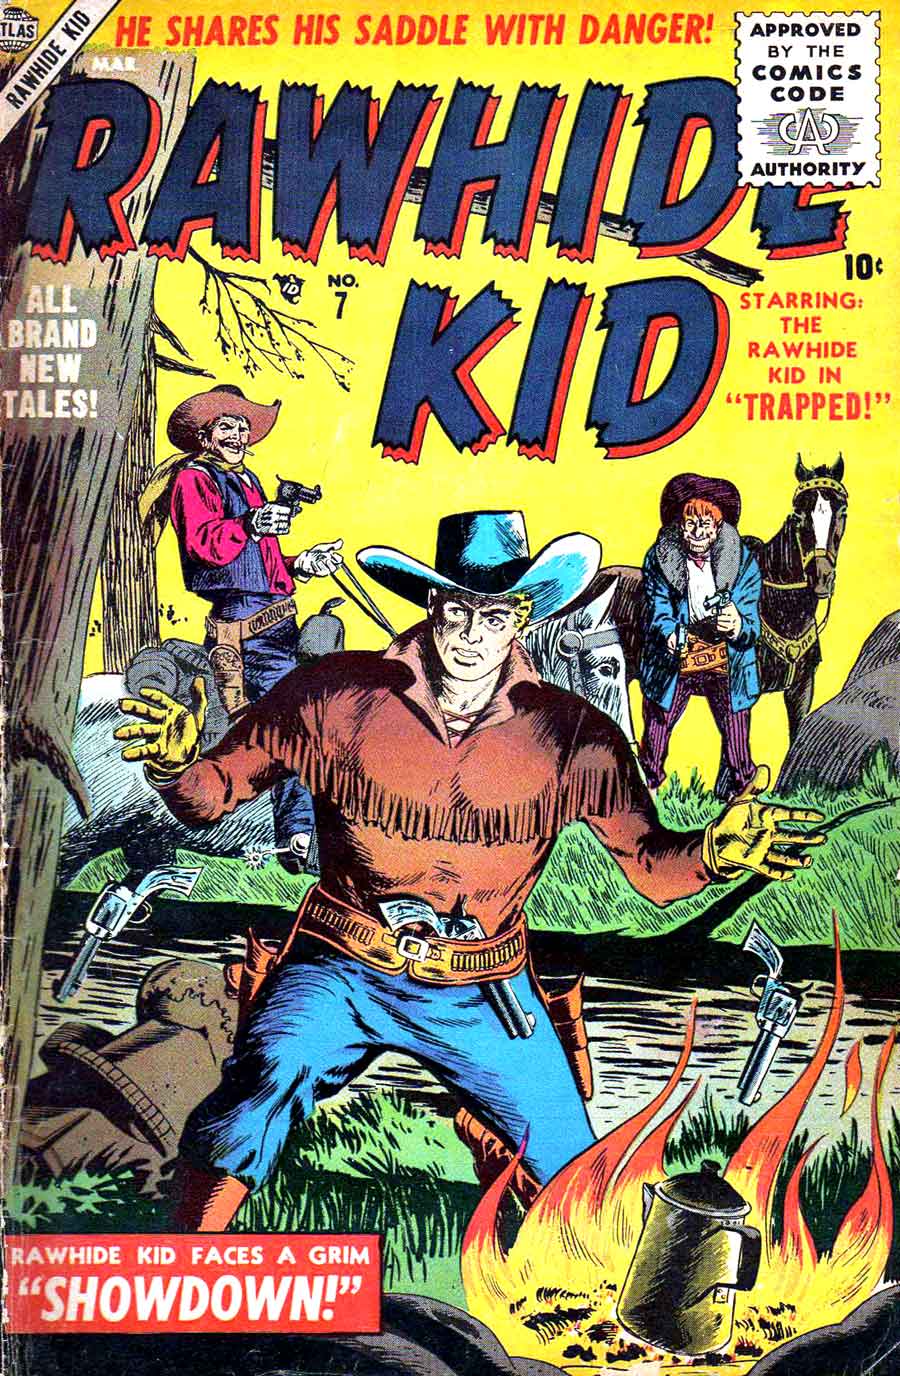 Rawhide Kid #7 golden age atlas western1950s comic book cover